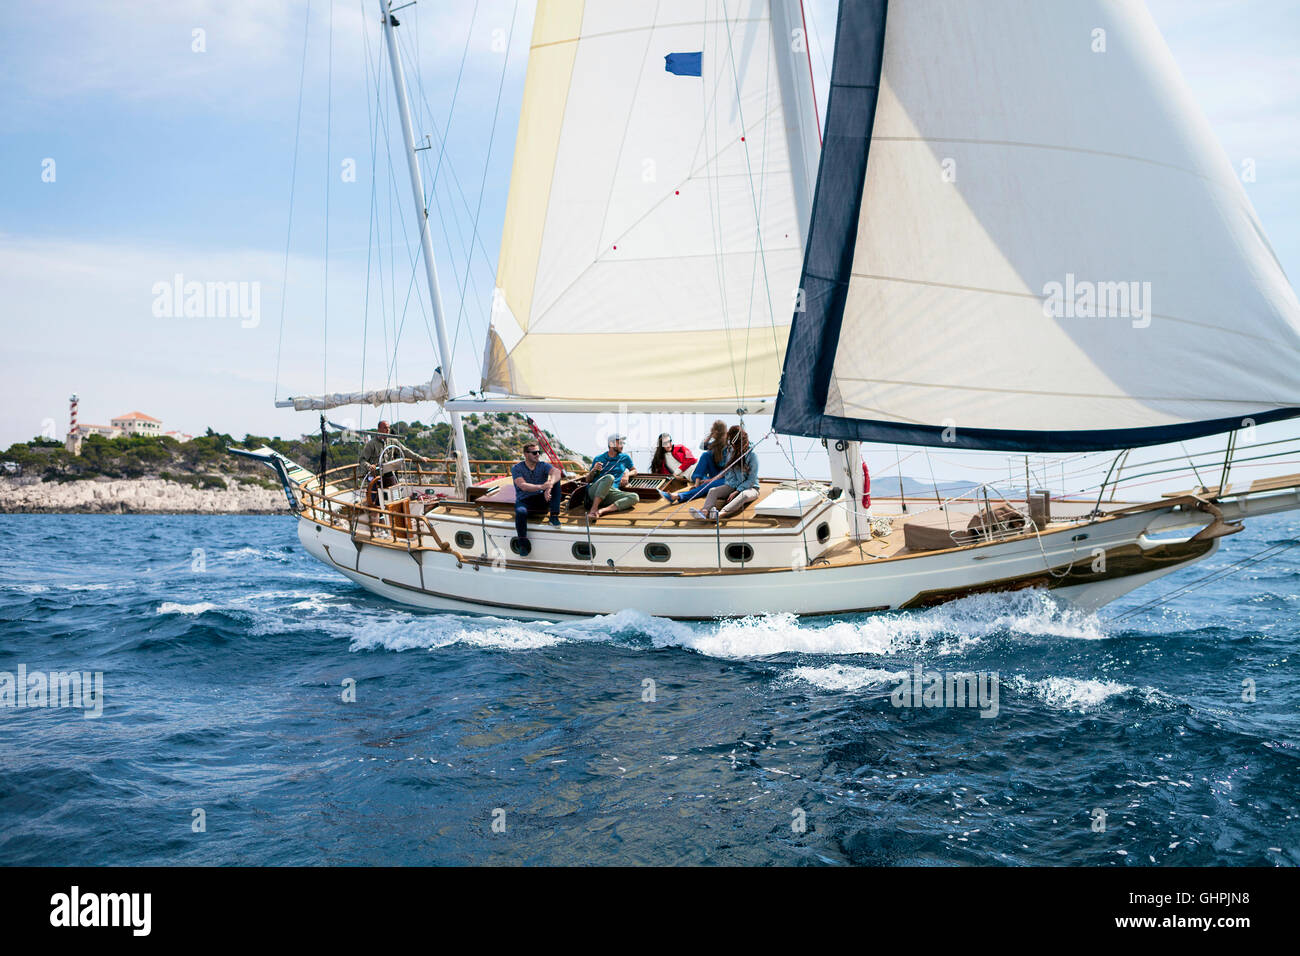 Adriatic Sea with sailing ship Stock Photo